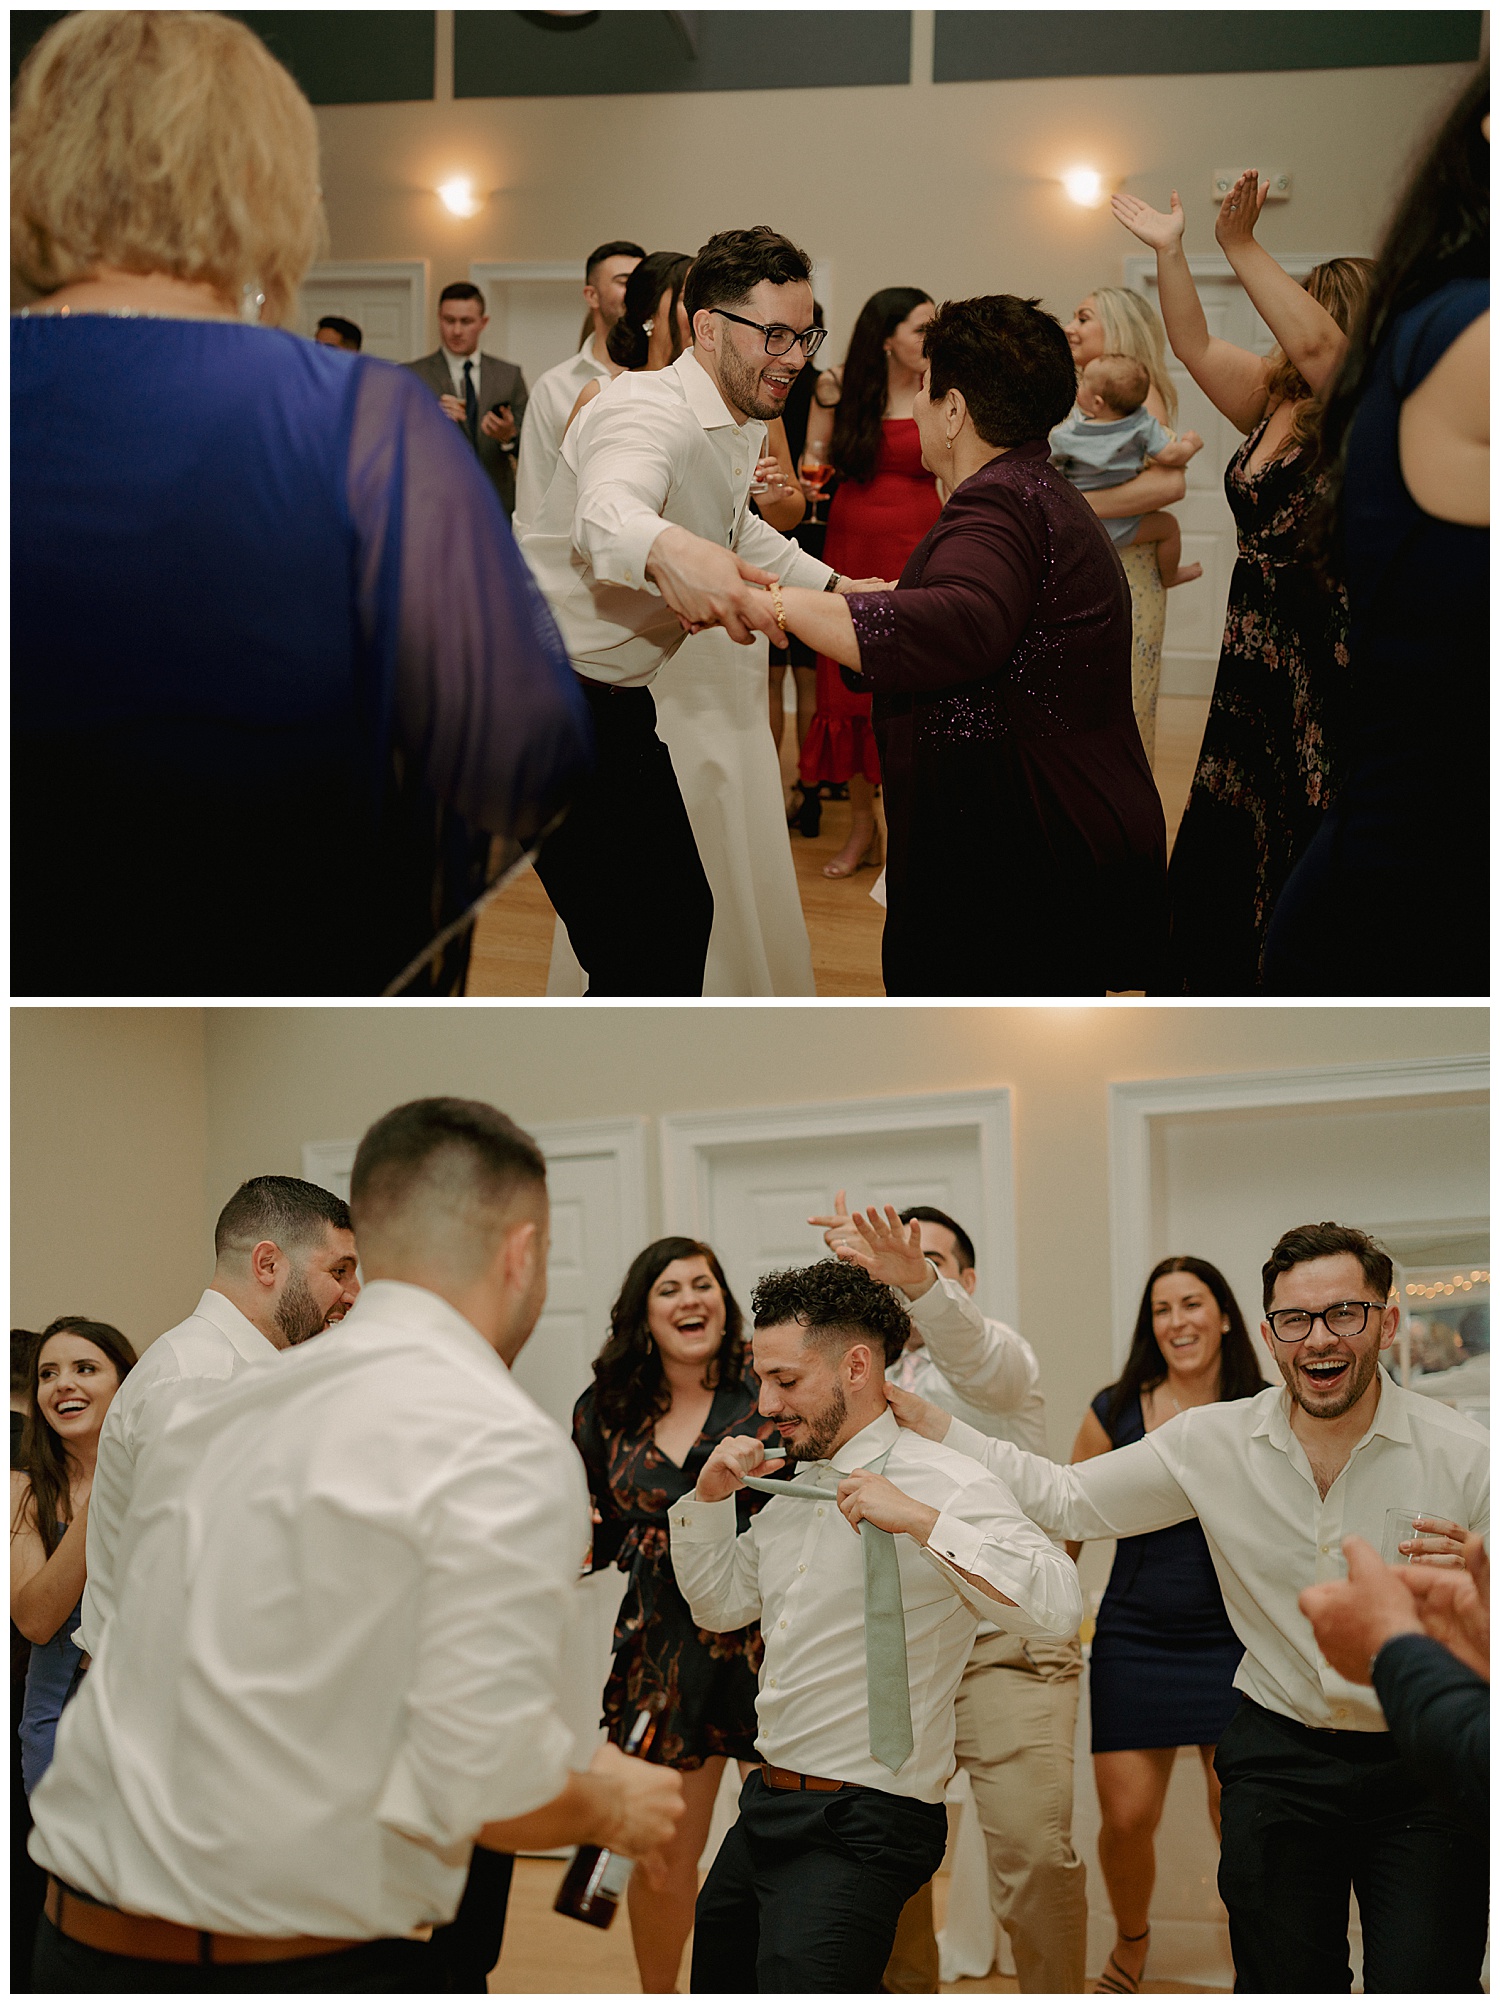 Candid wedding dancing reception photos